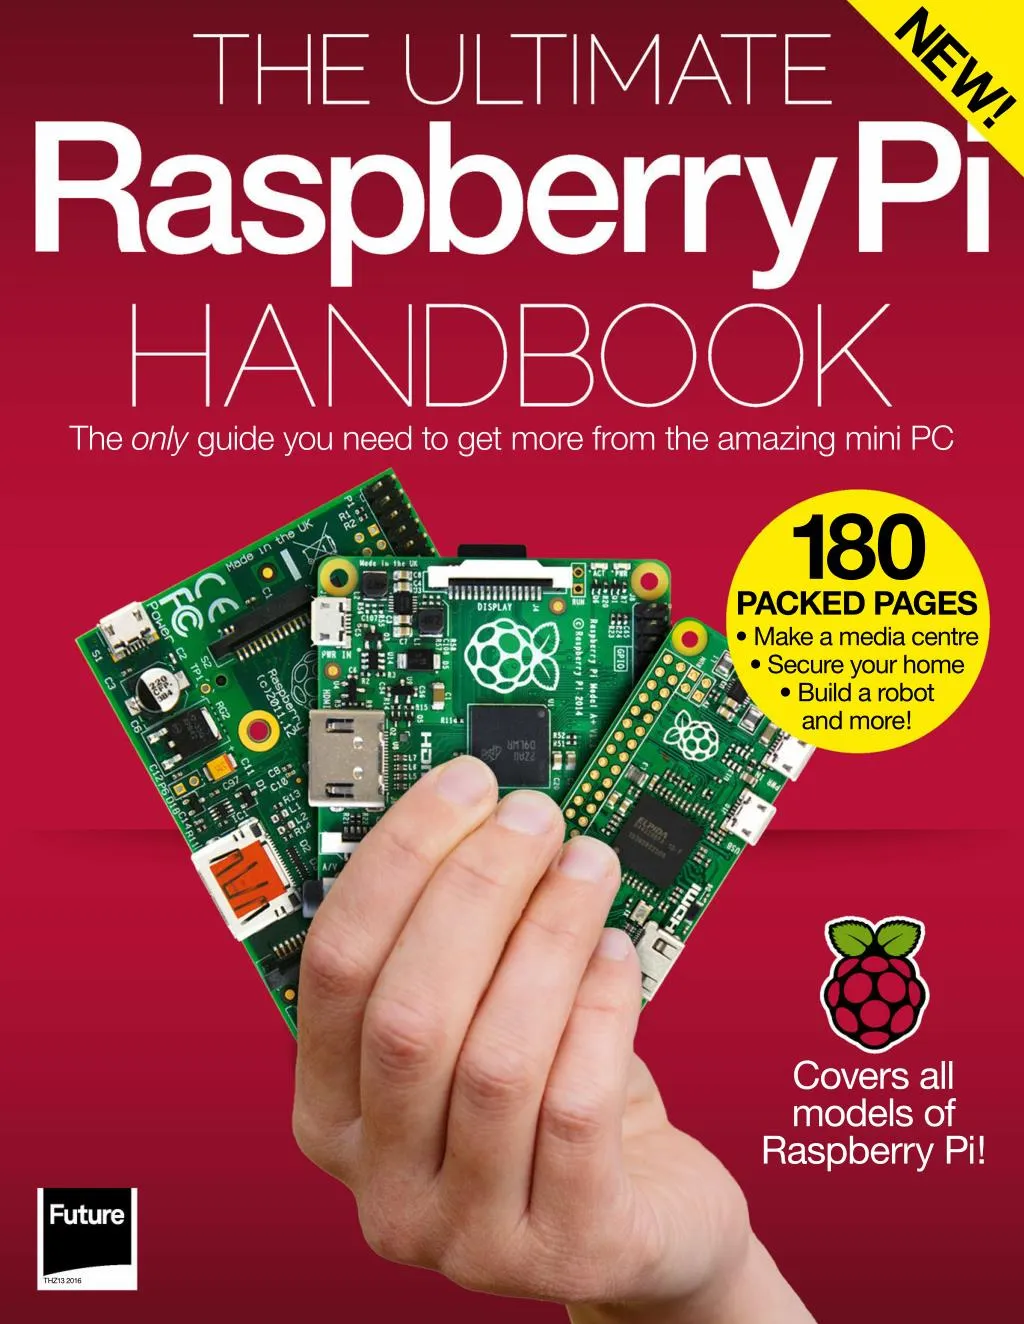 Introducing the Raspberry Pi 3 B+ Single Board Computer - Raspberry Pi Spy